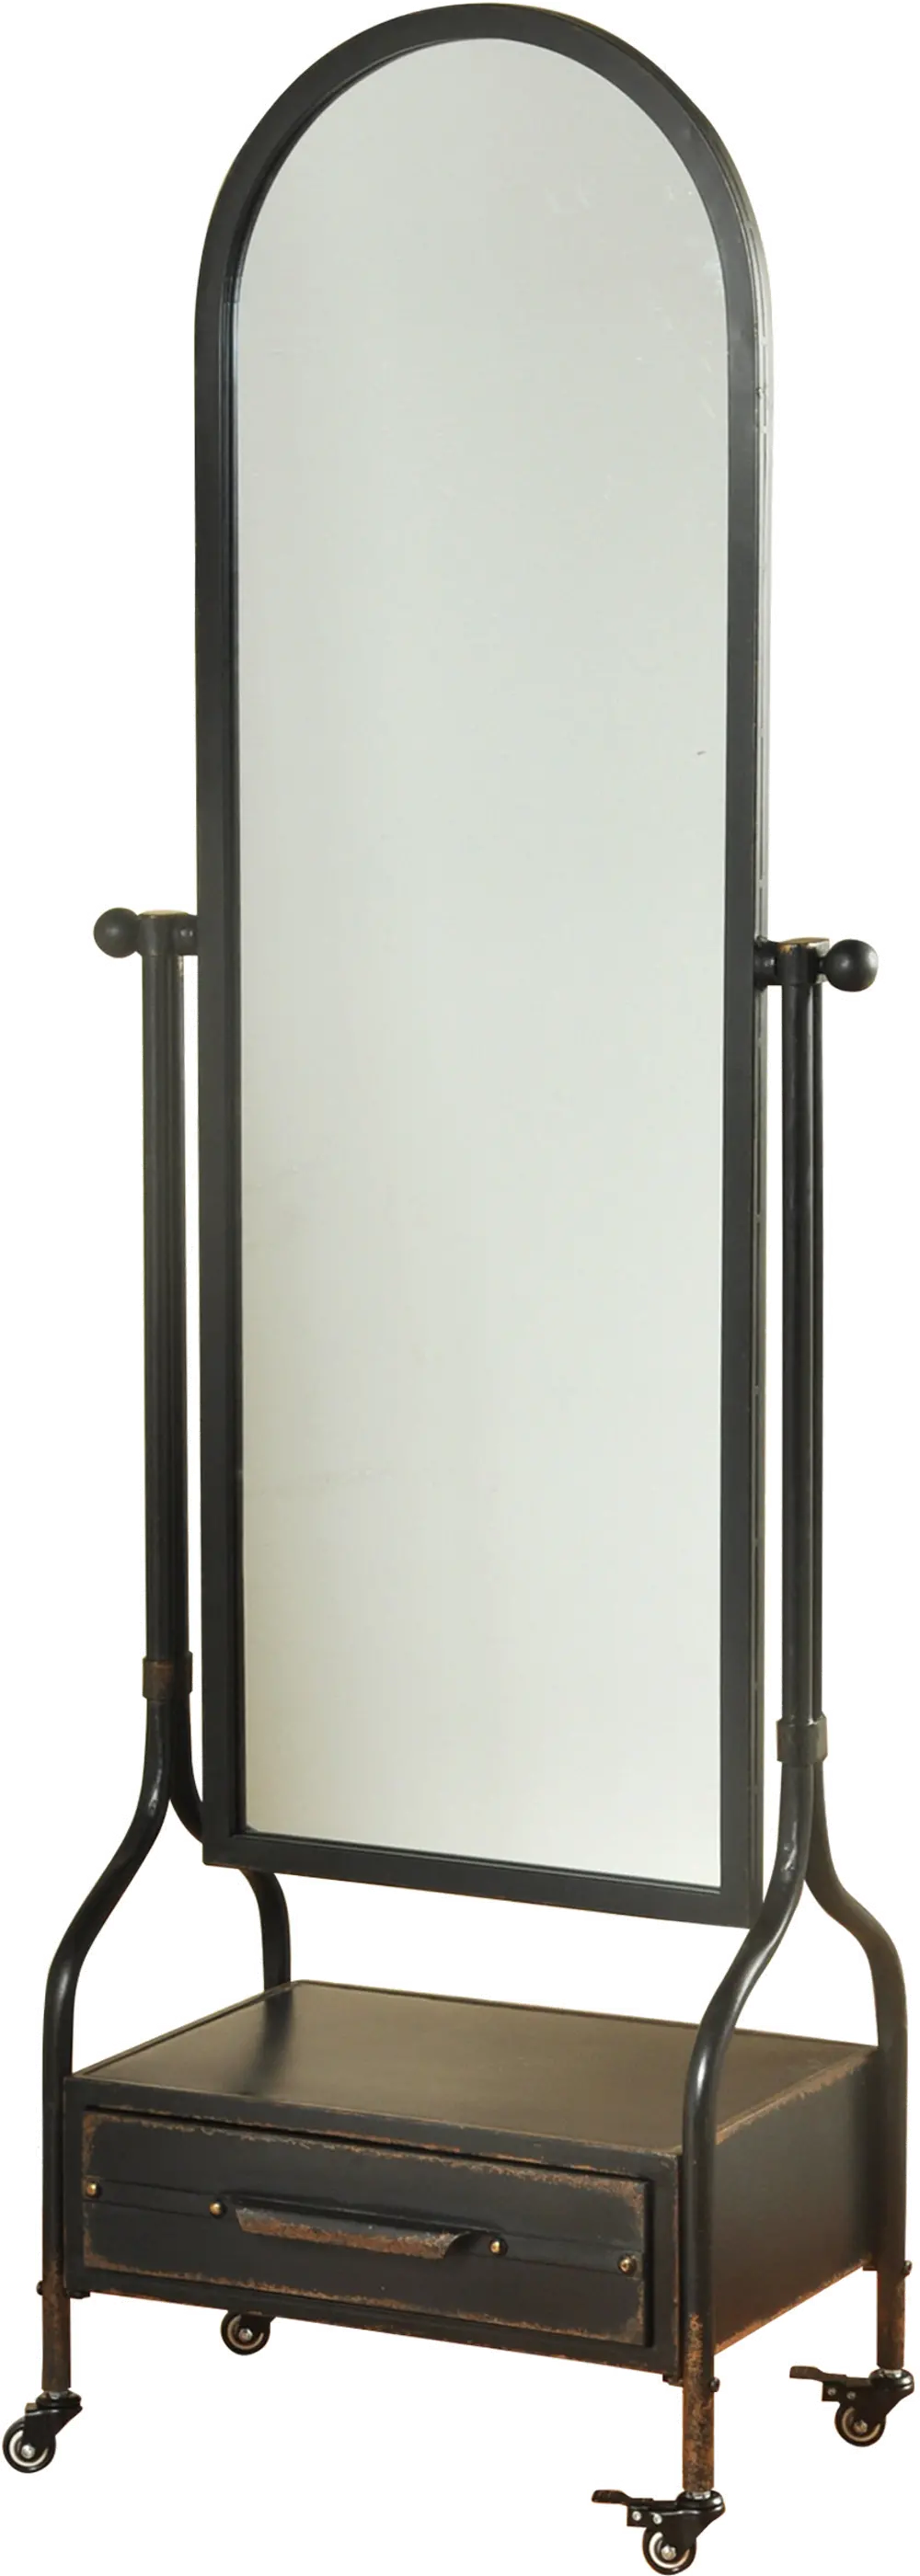 Blackened Gray Galvanized Cheval Mirror With Storage Drawer-1